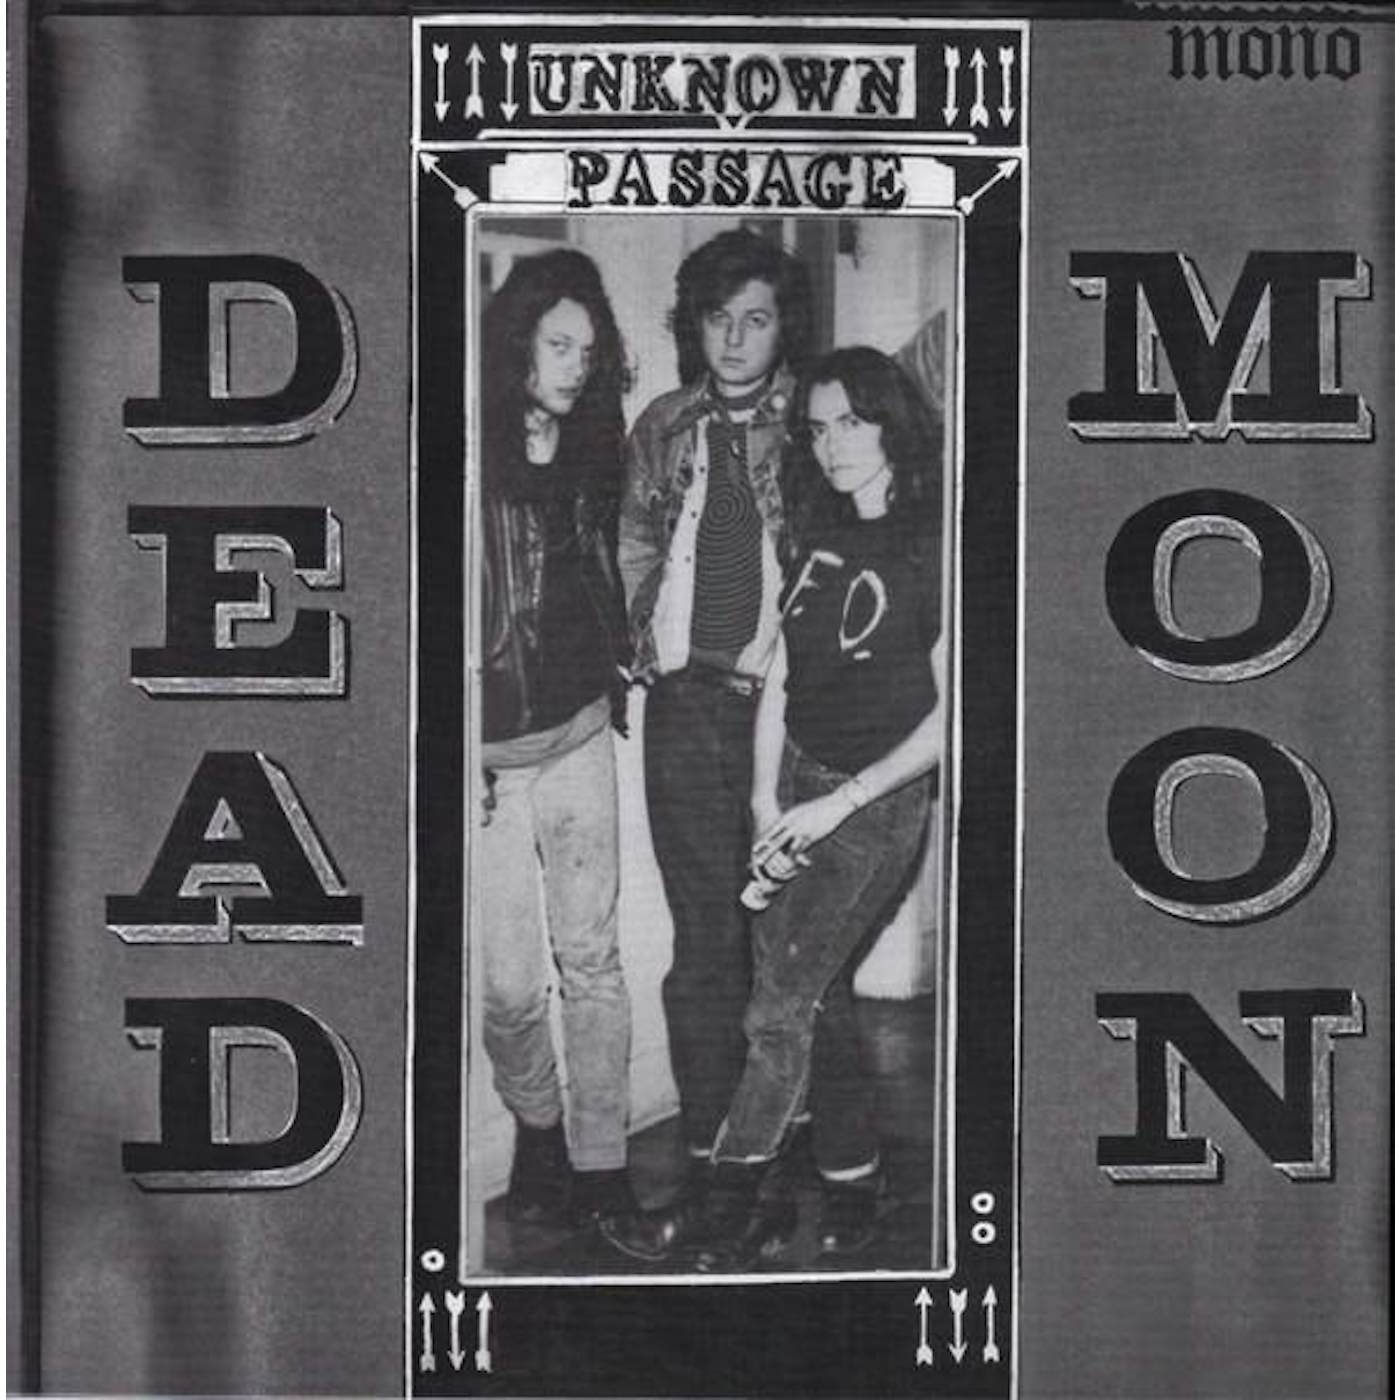 Dead Moon IN THE GRAVEYARD Vinyl Record